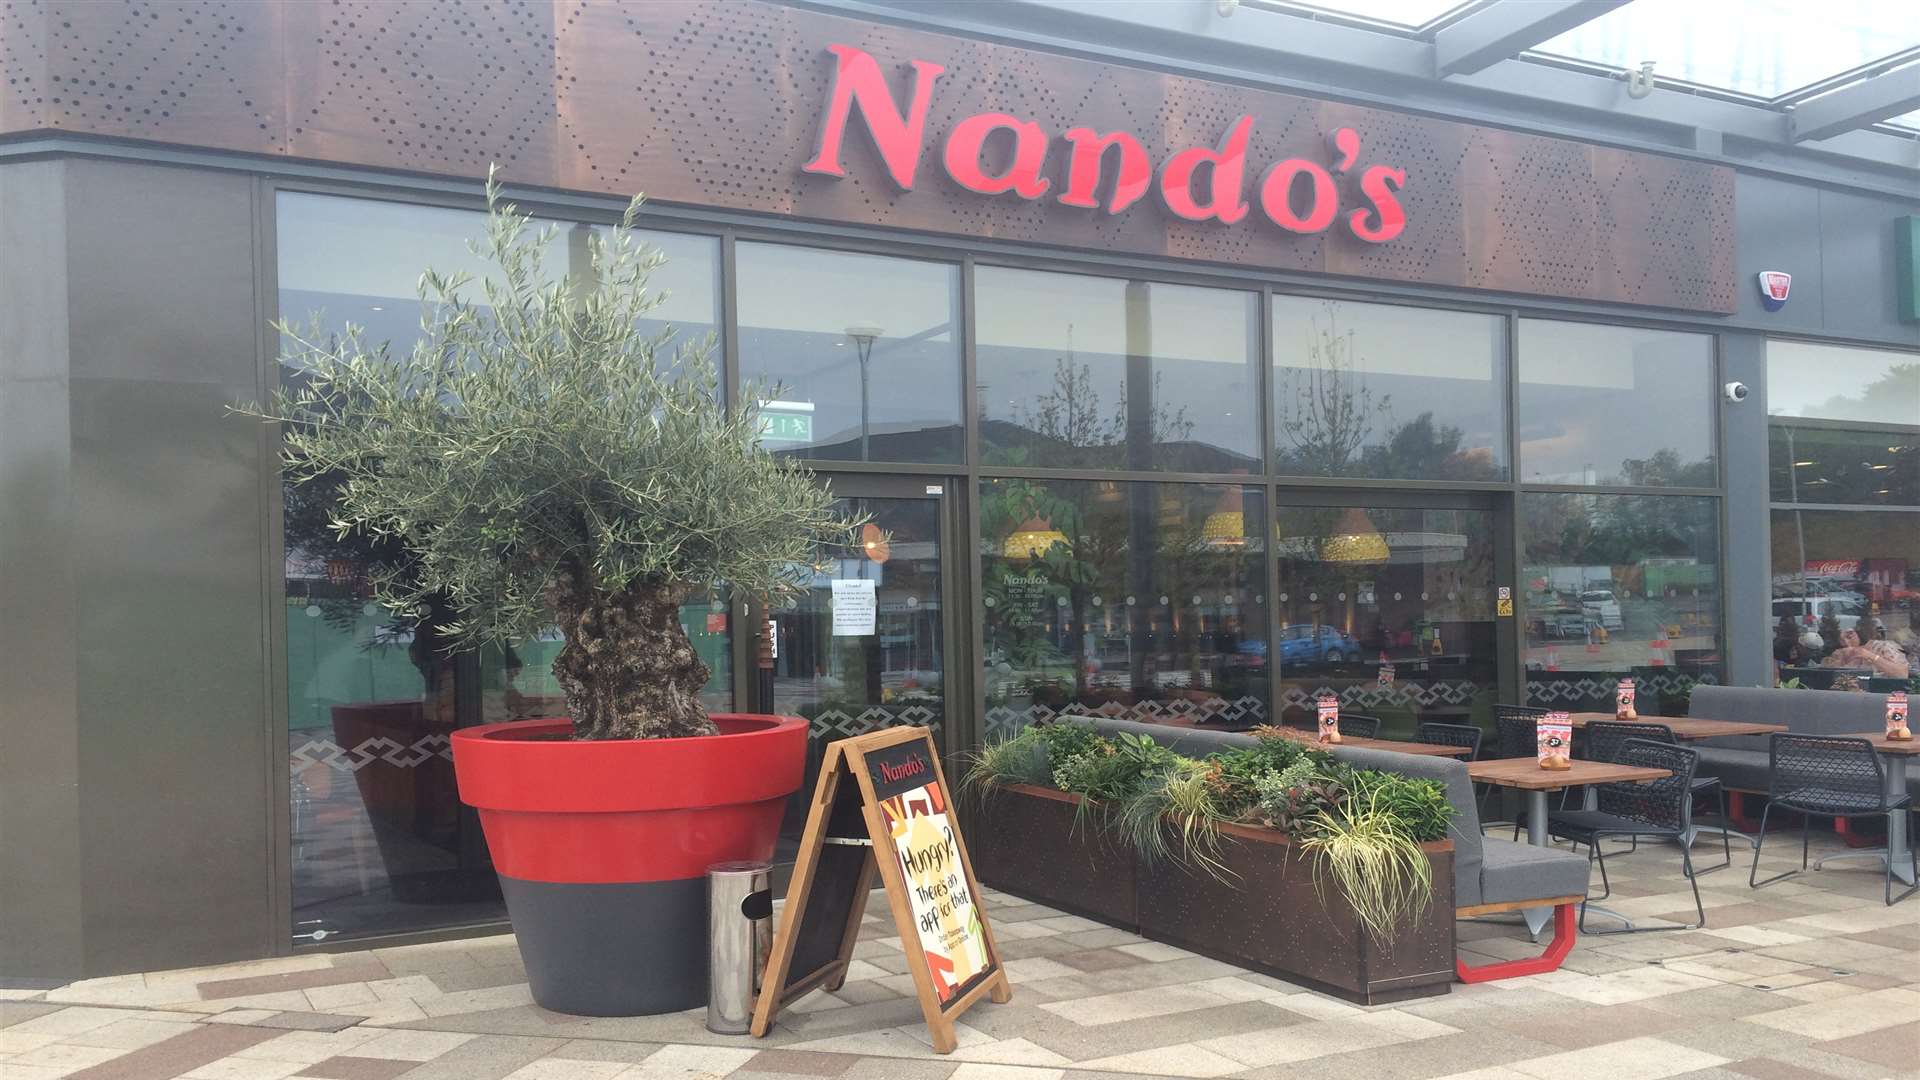 Nandos at Hempstead Valley Shopping Centre.